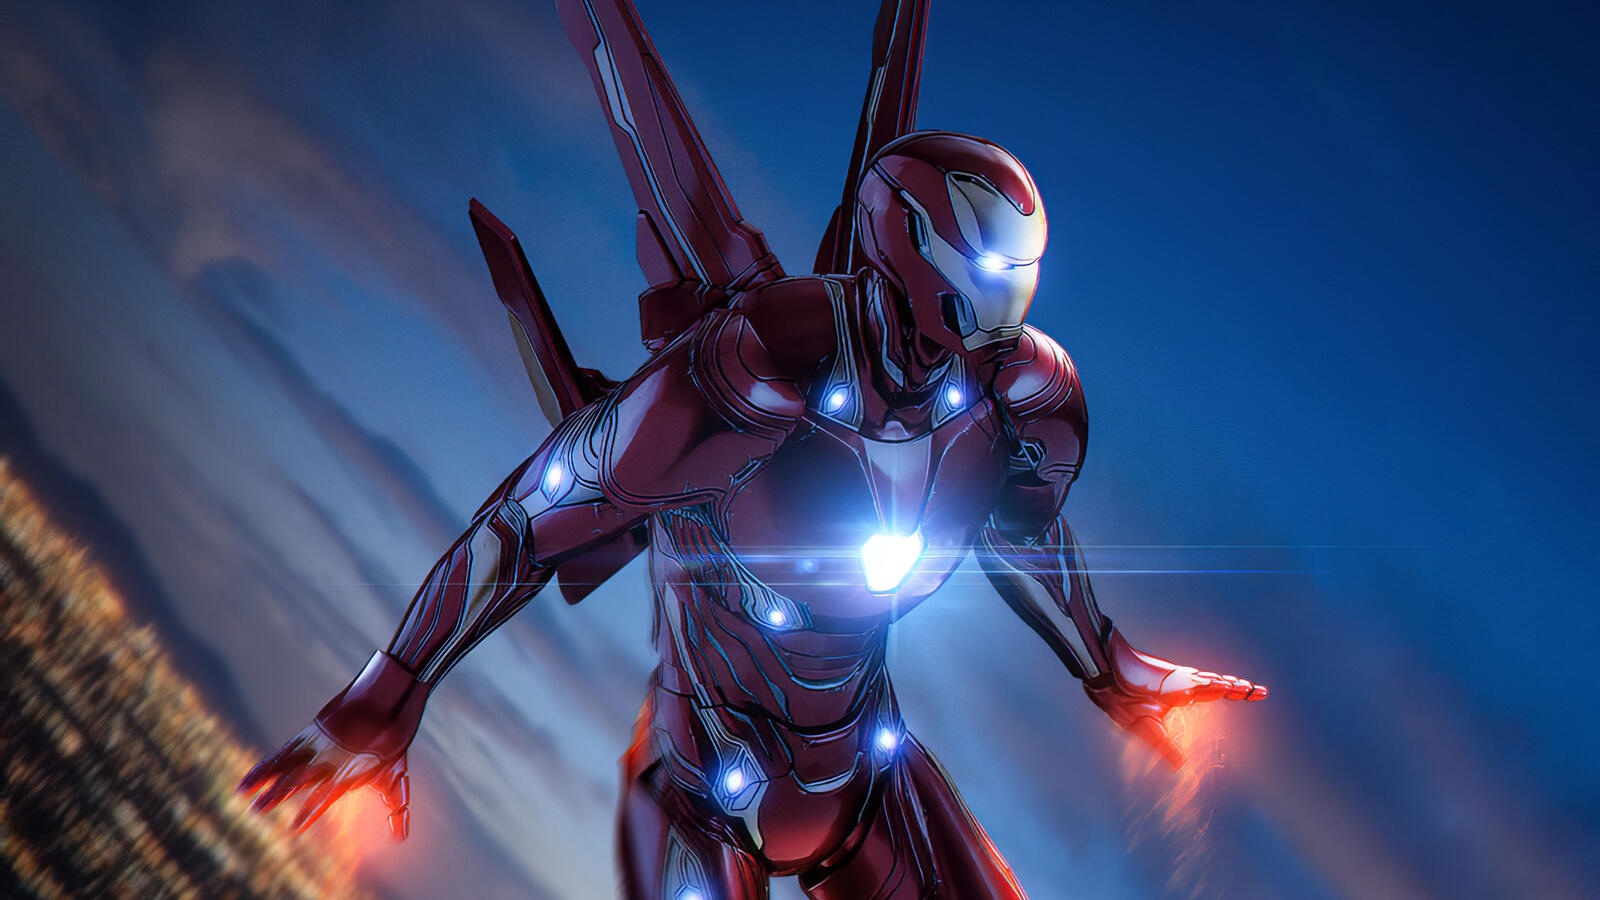 Wallpapers Iron Man superheroes Behance on the desktop